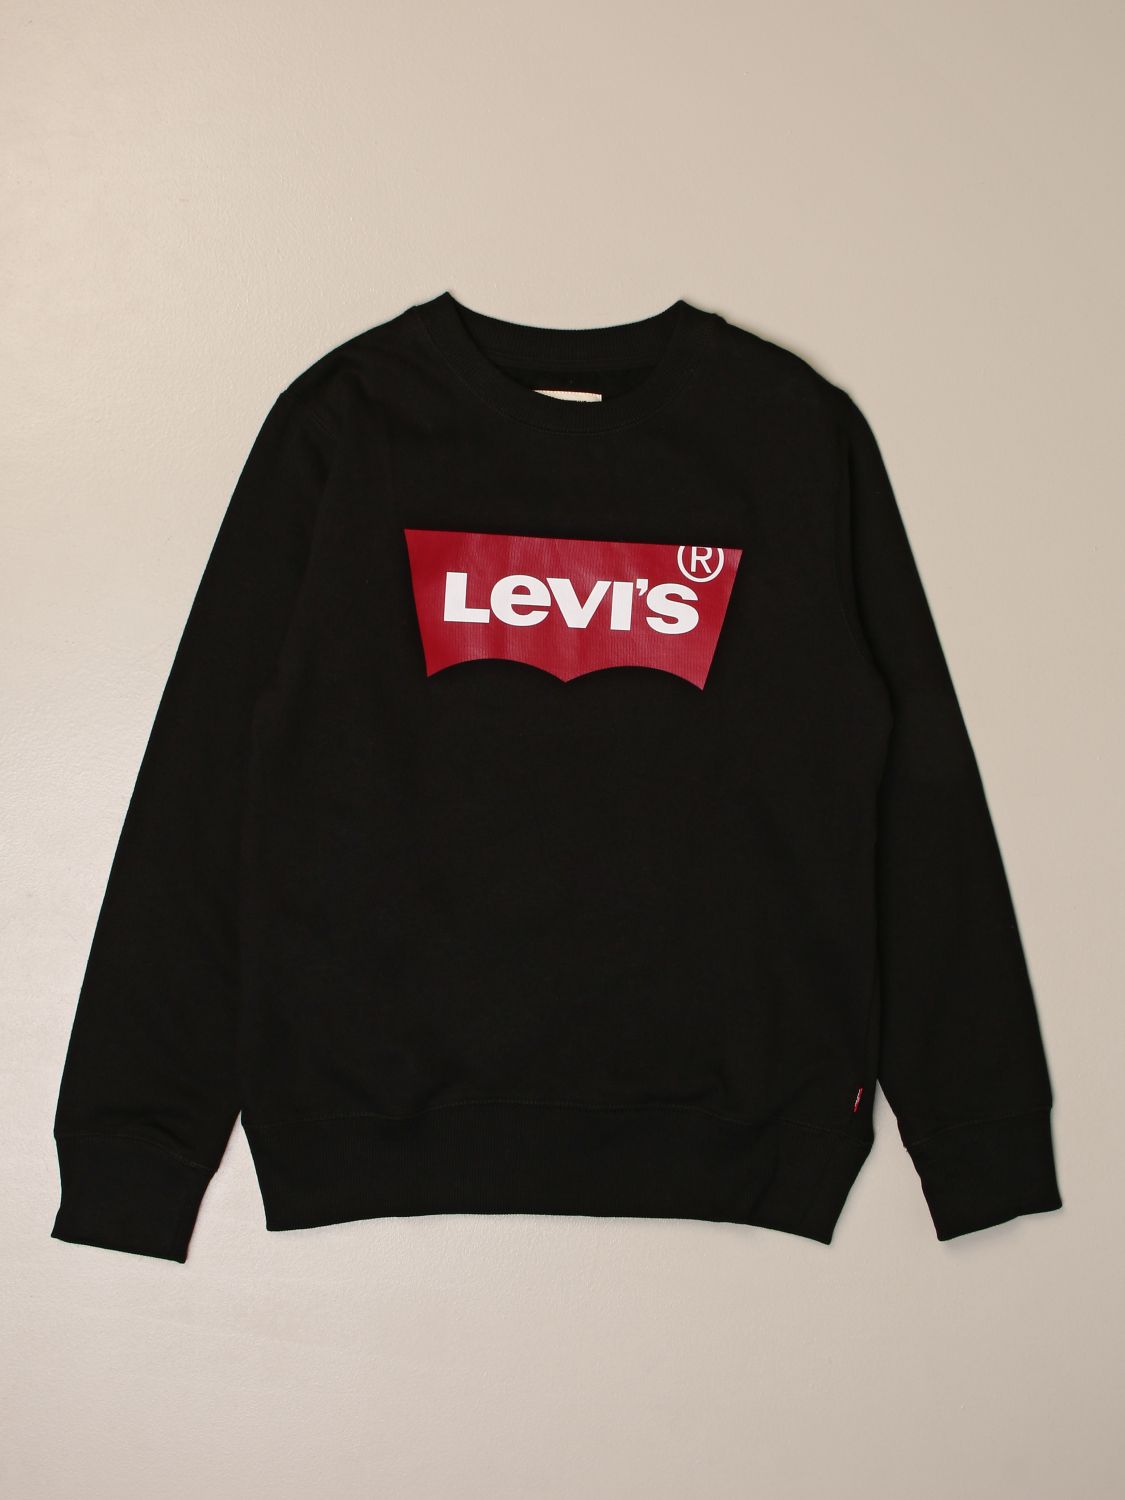 levis black jumper